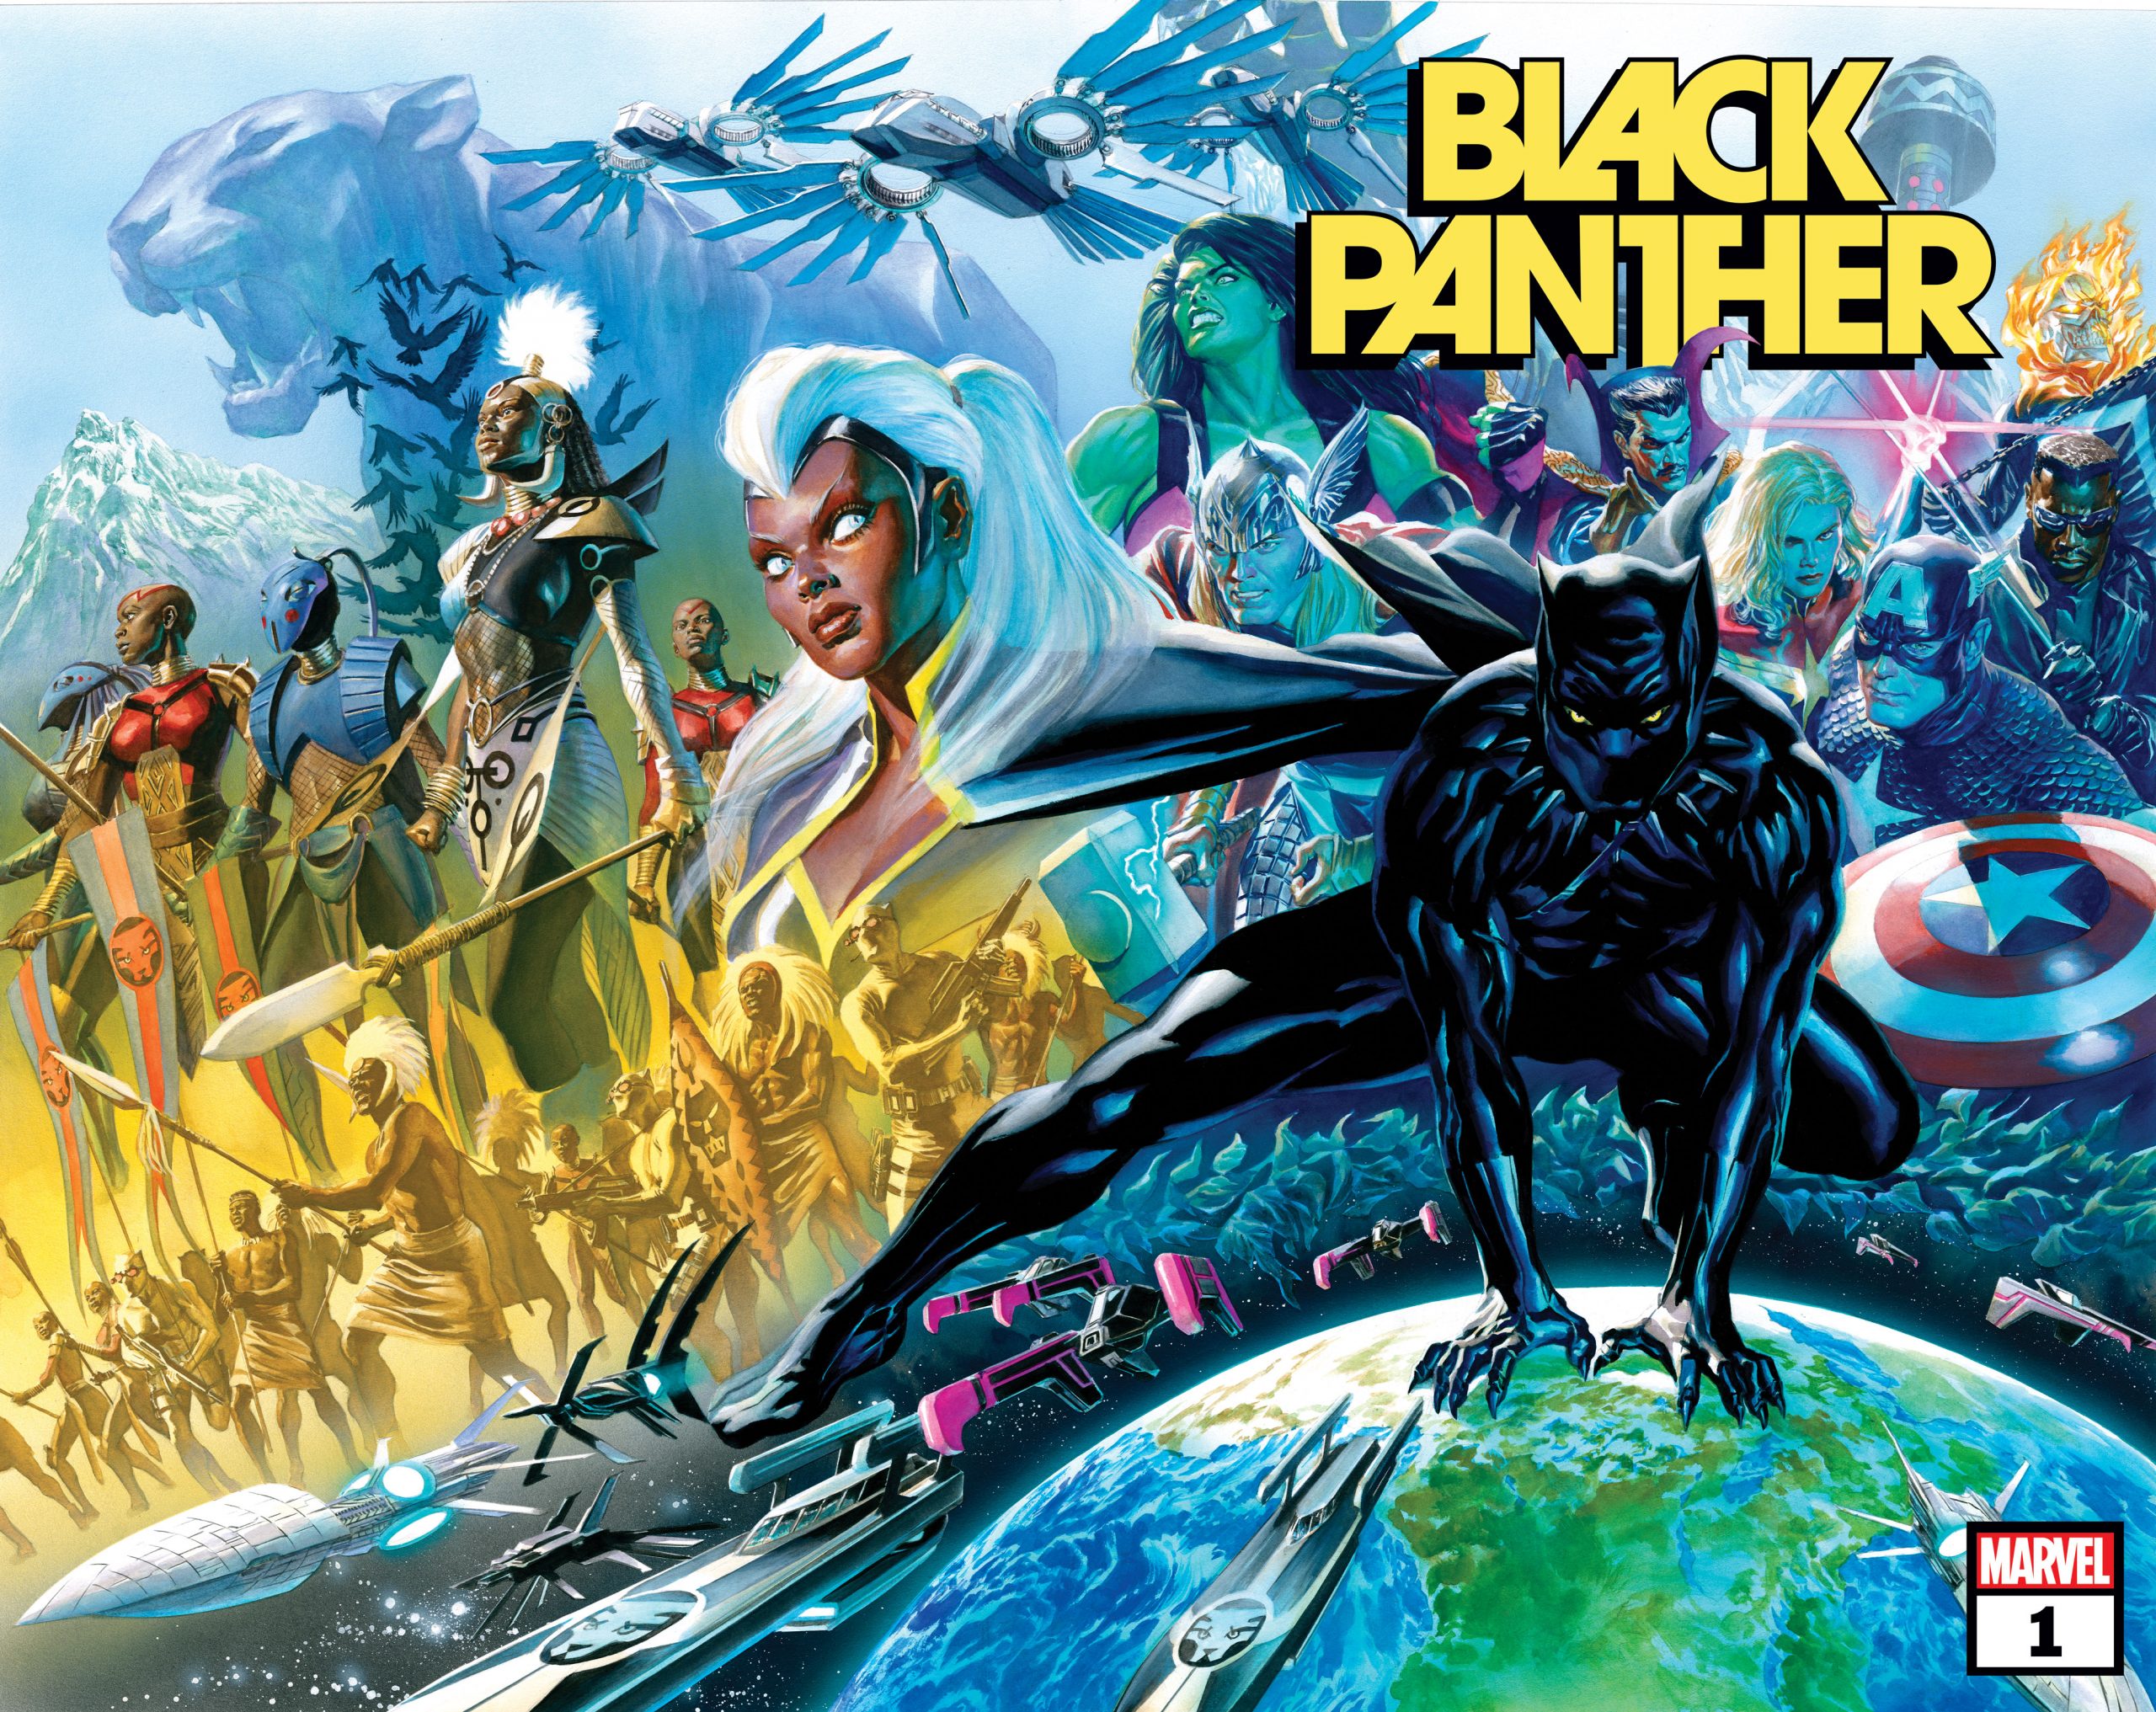 Novo gibi do Pantera Negra por John Ridley - Marvel Comics - 00 - Blog Farofeiros